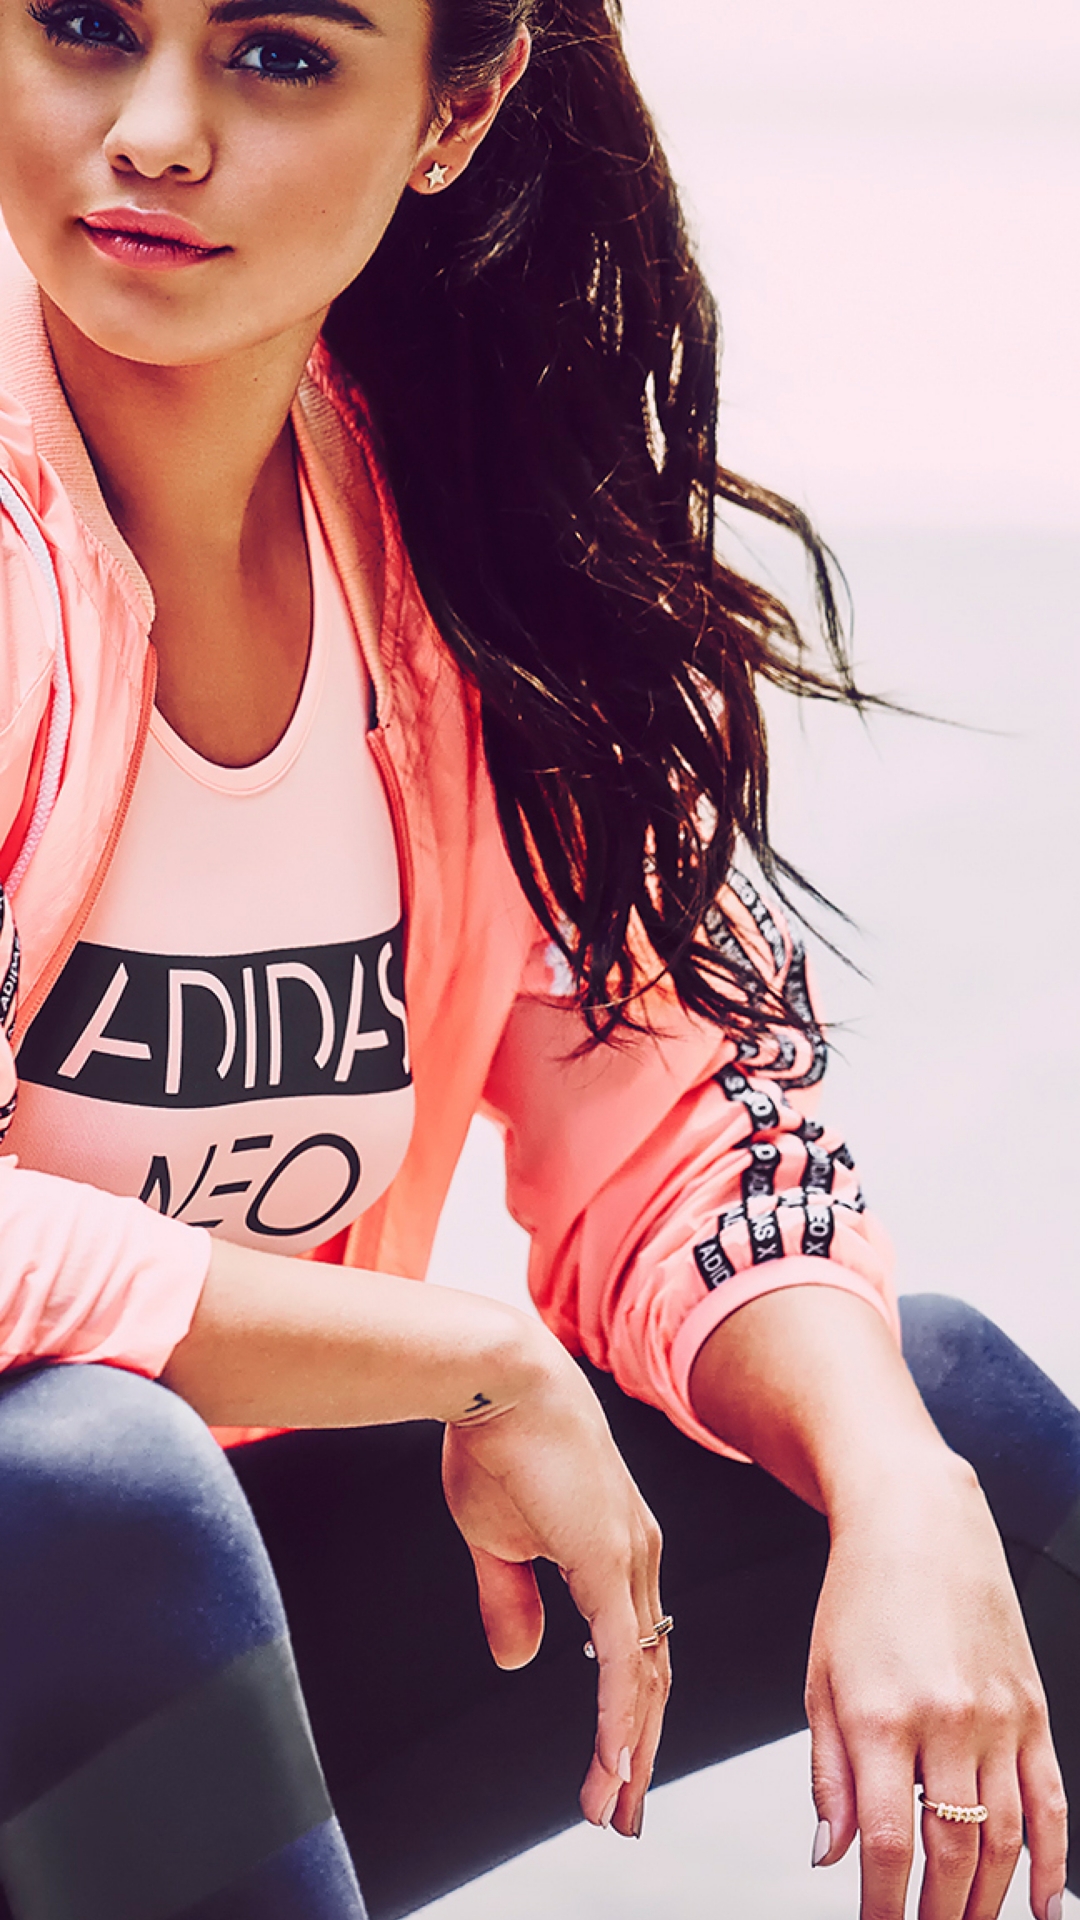 Download Selena Gomez, Adidas Neo, Photohoot Samsung Galaxy S4